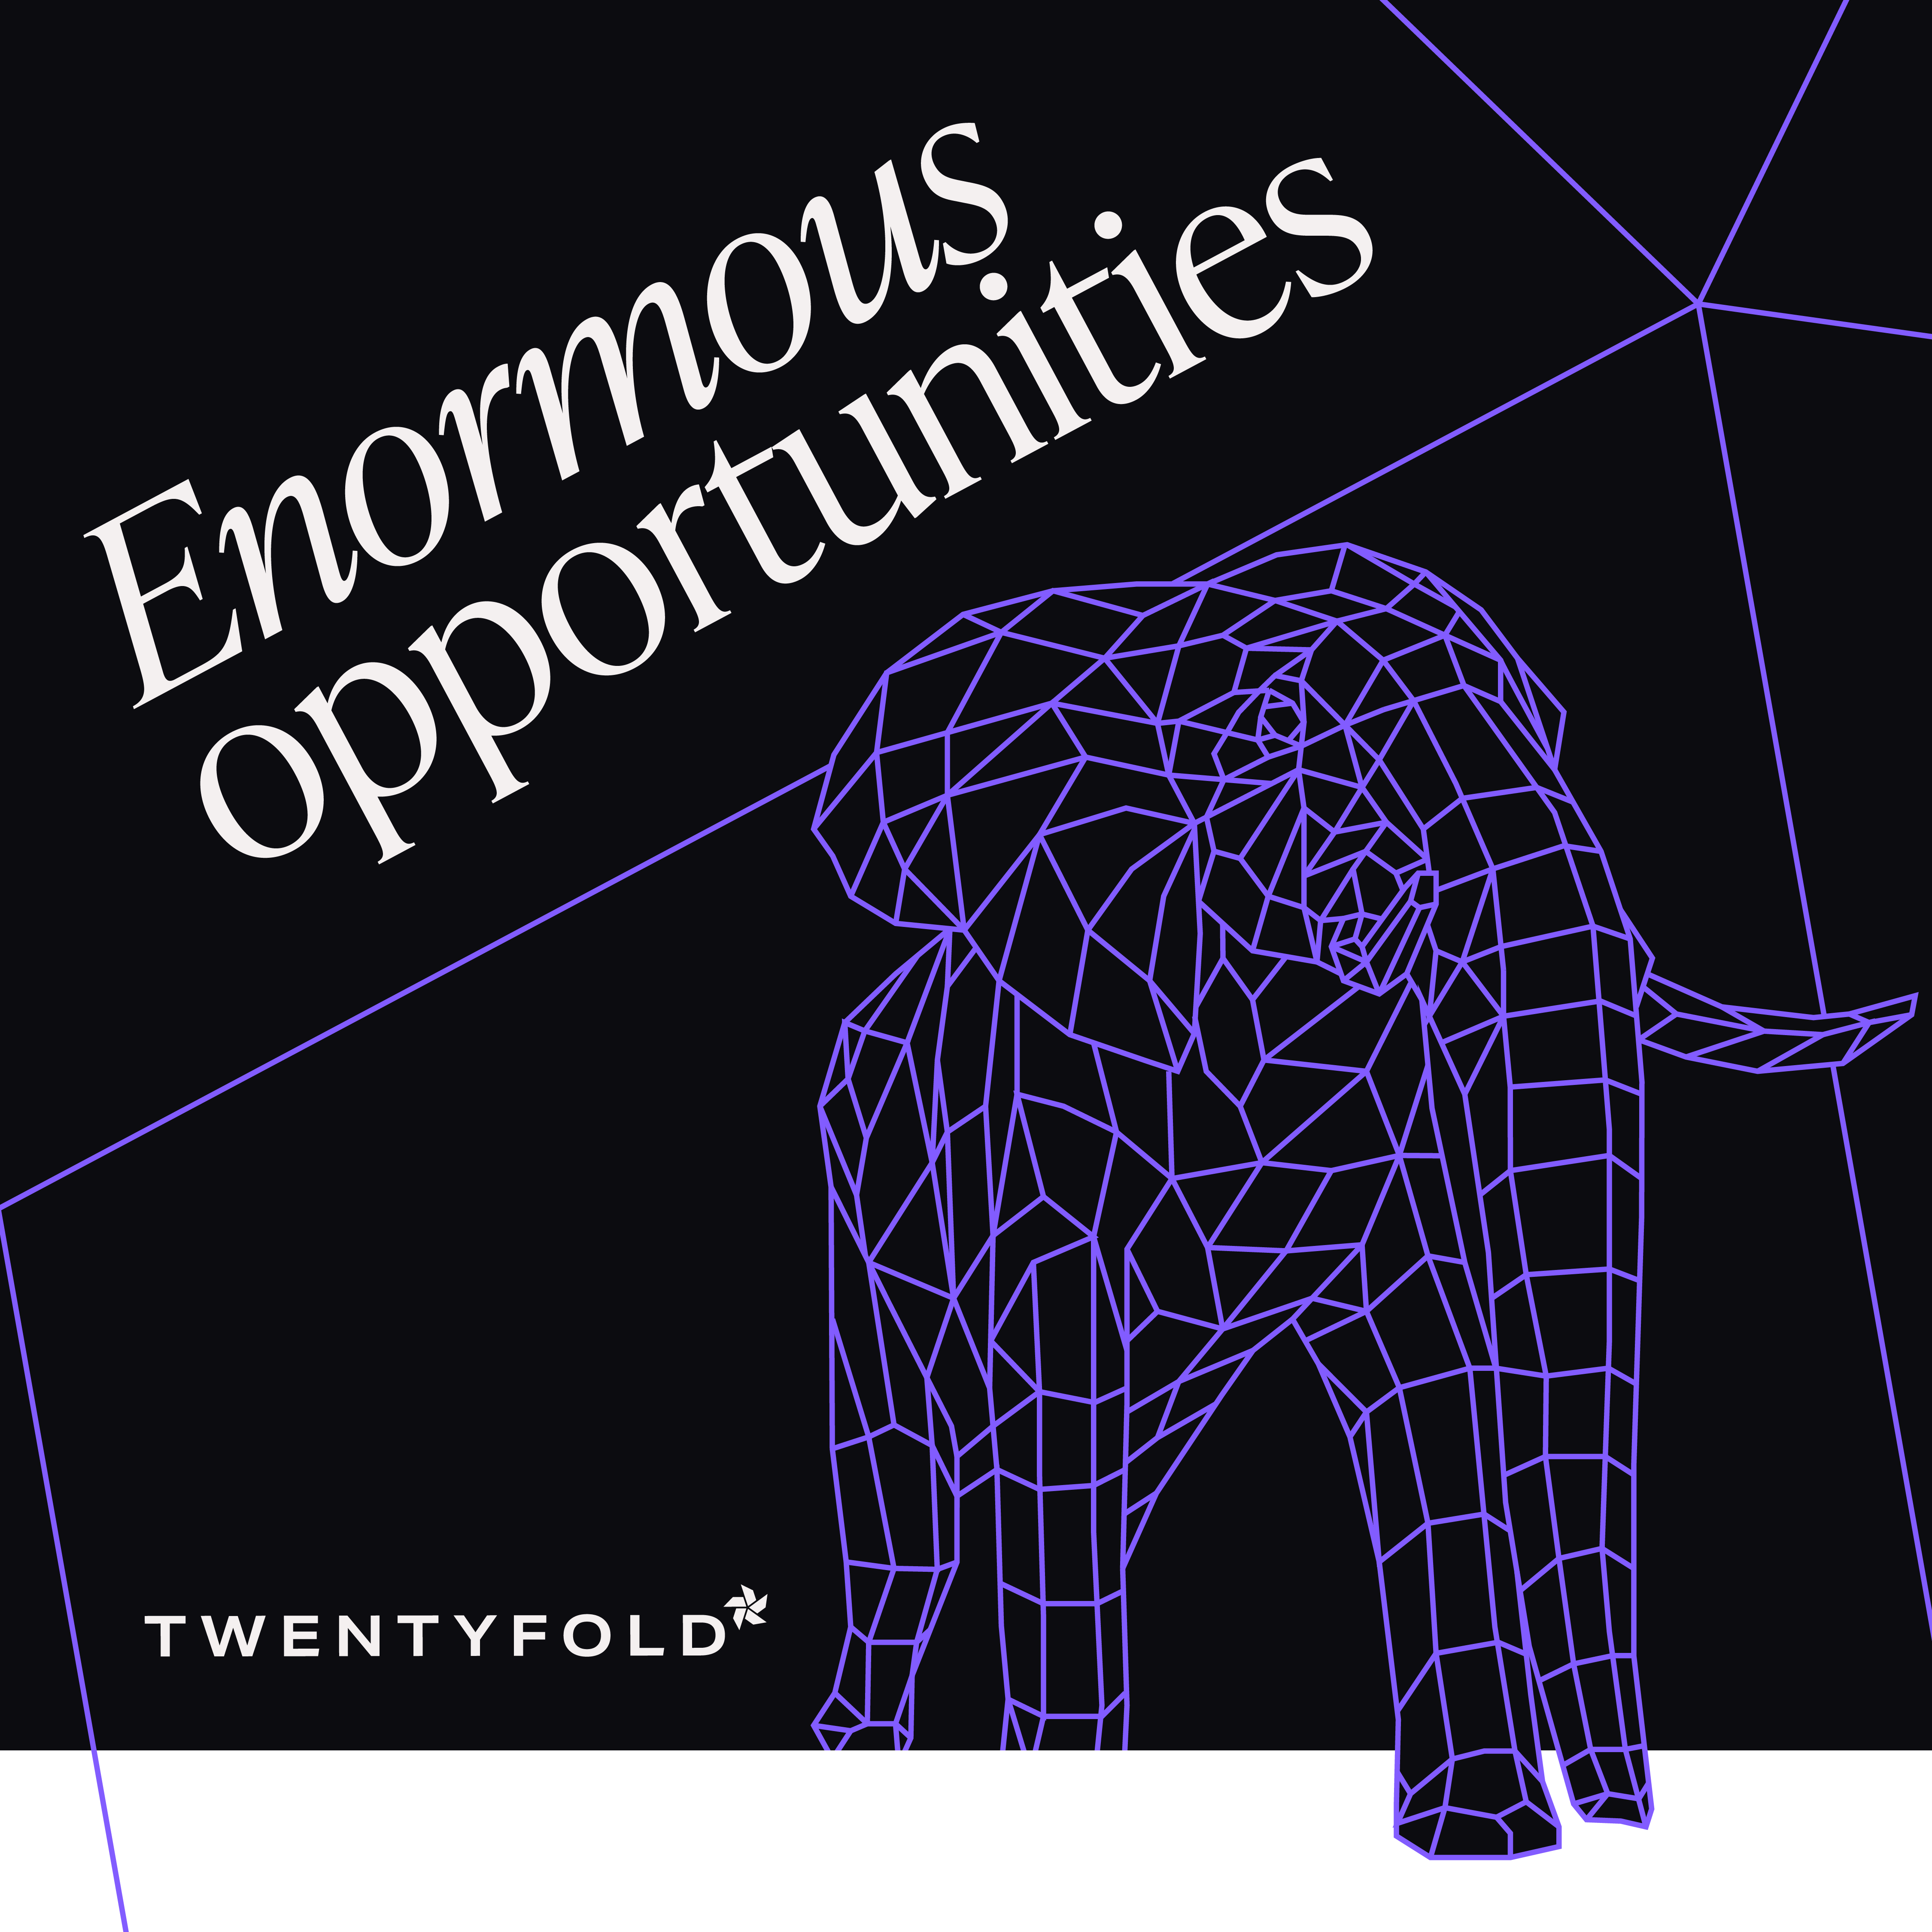 Elephant - enormous opportunities